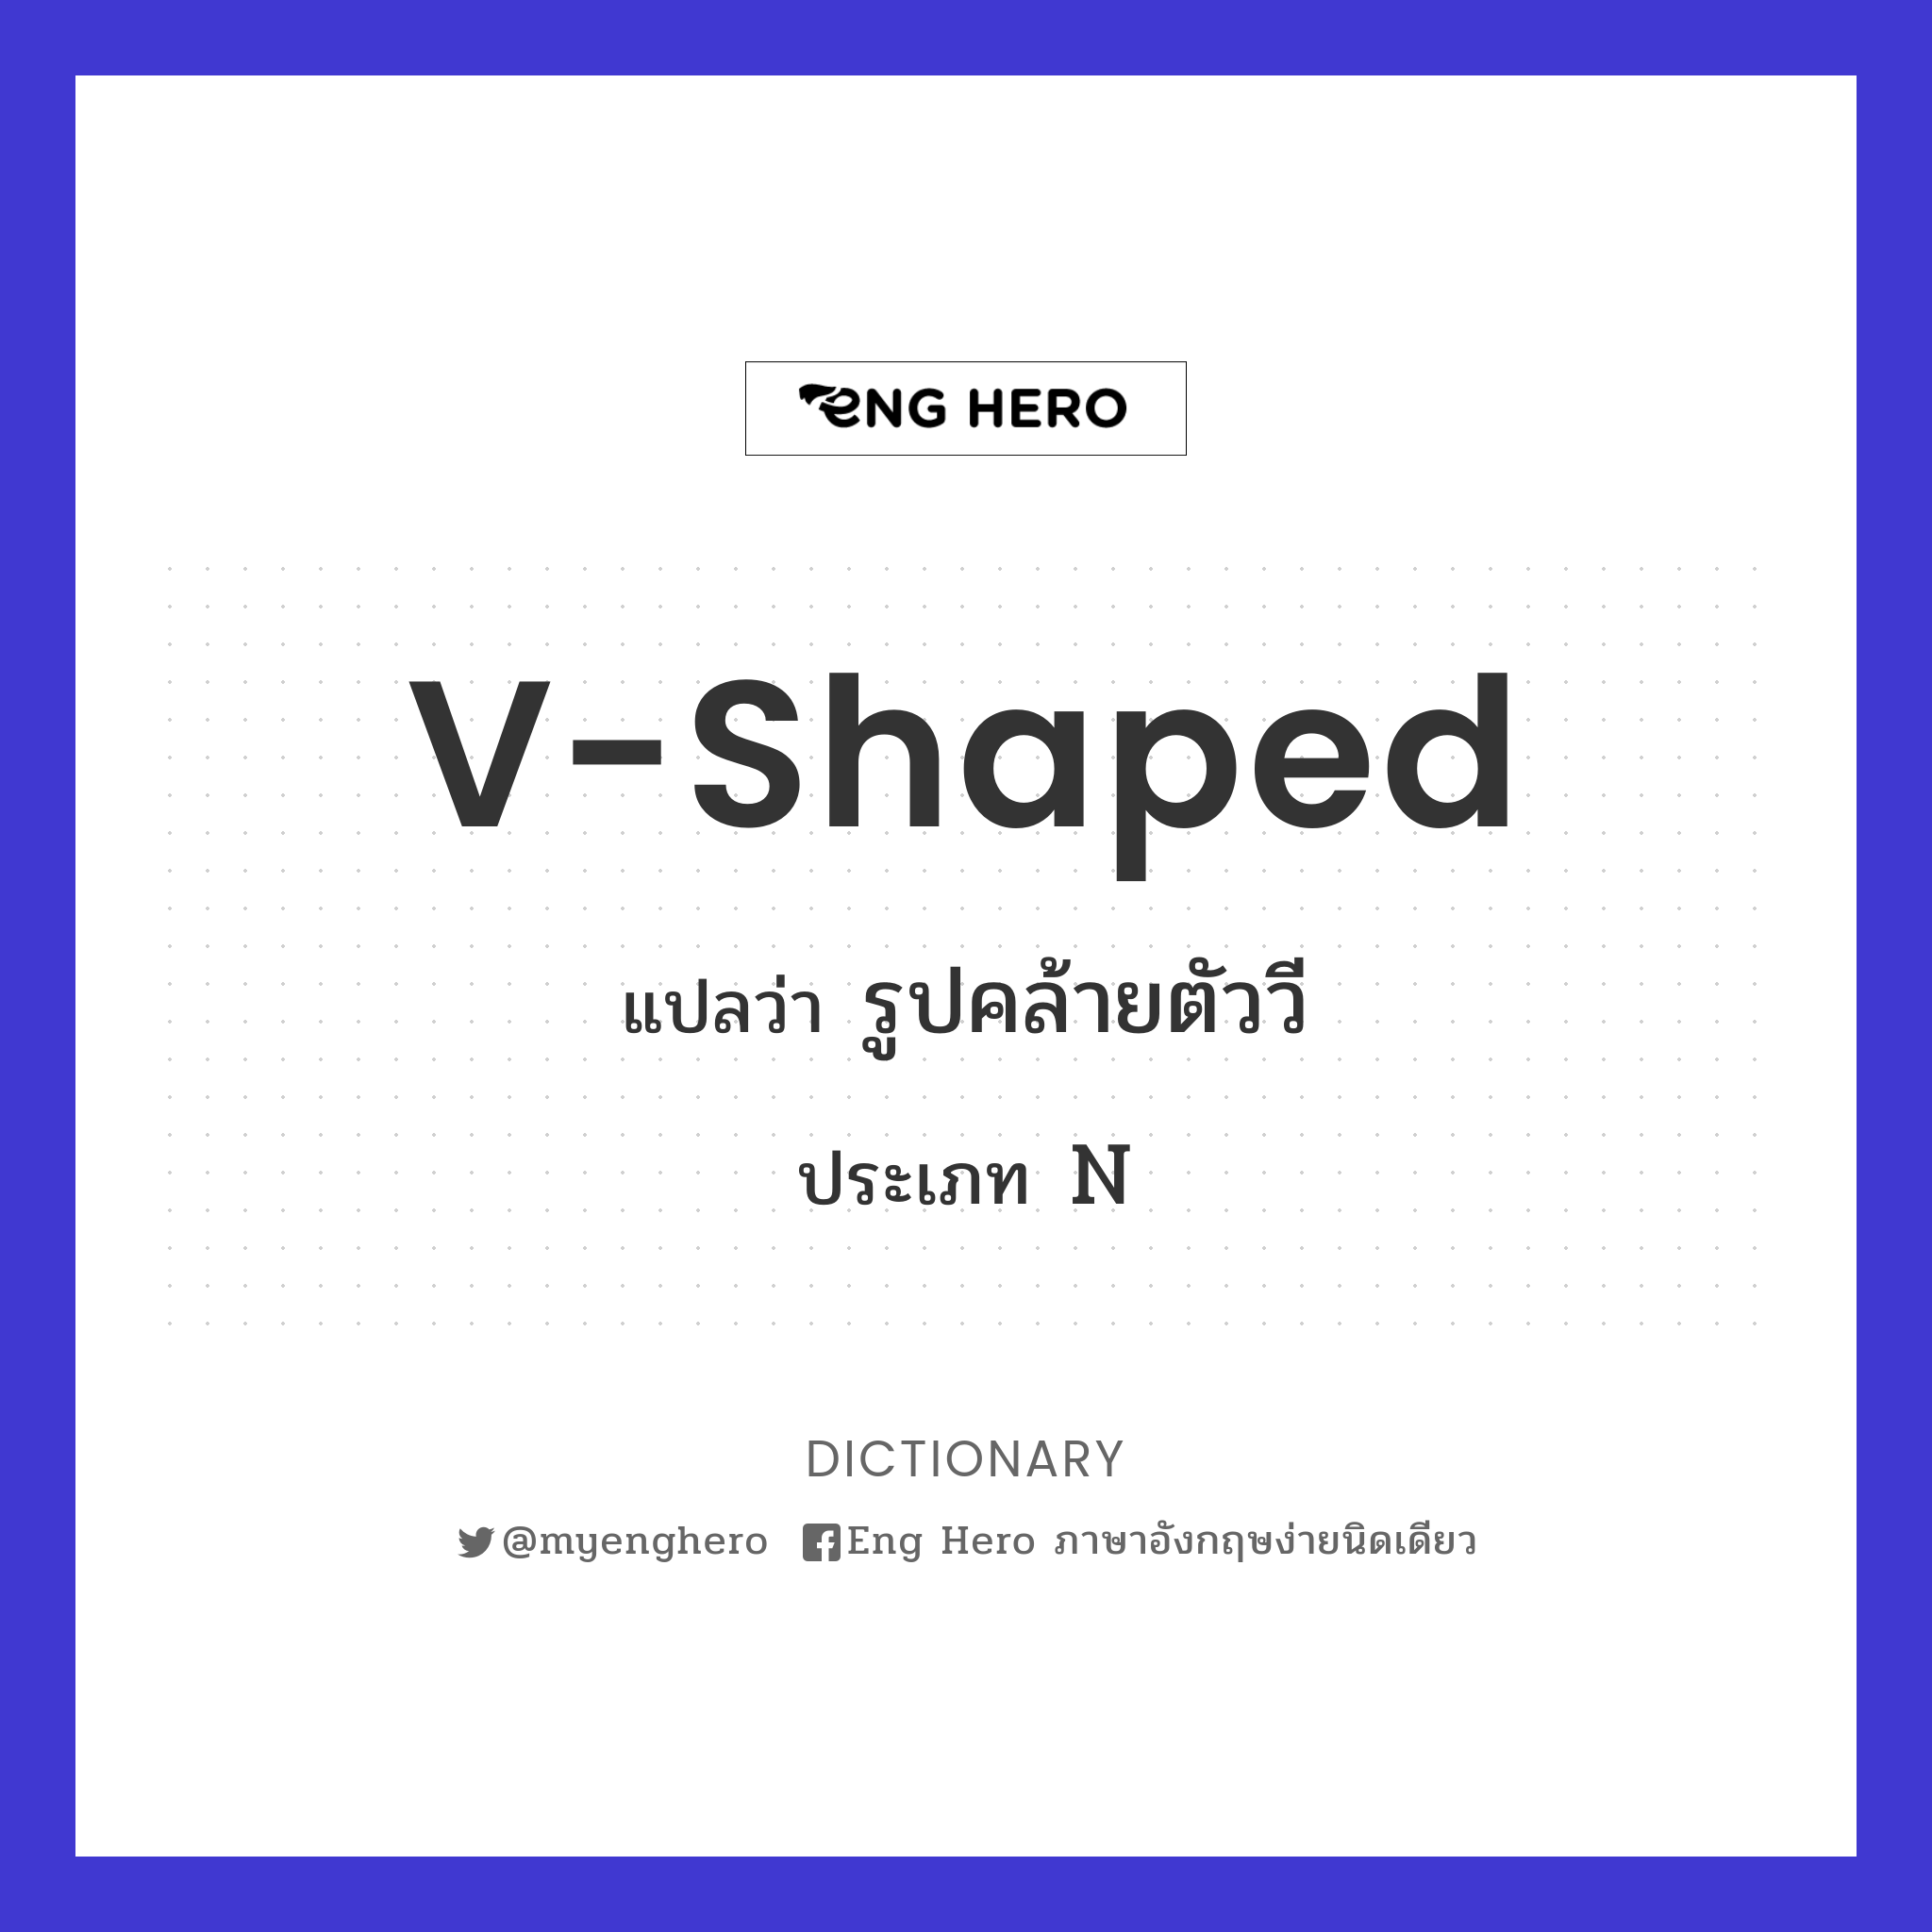 V-shaped